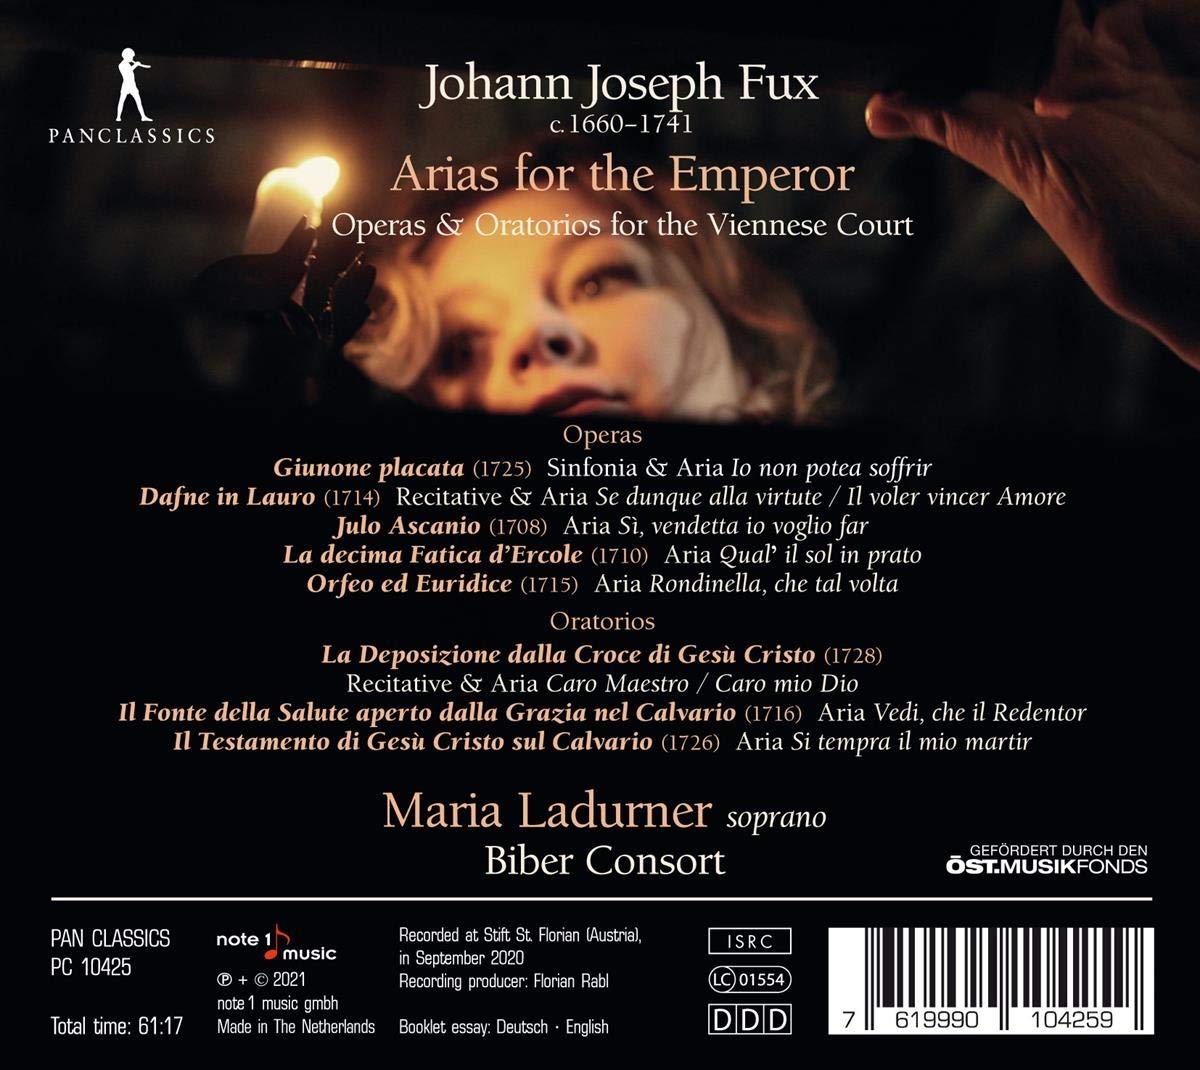 Maria Ladurner 푹스: 황제를 위한 아리아 (Johann Joseph Fux: Operas & Oratorios For the Viennese Court)